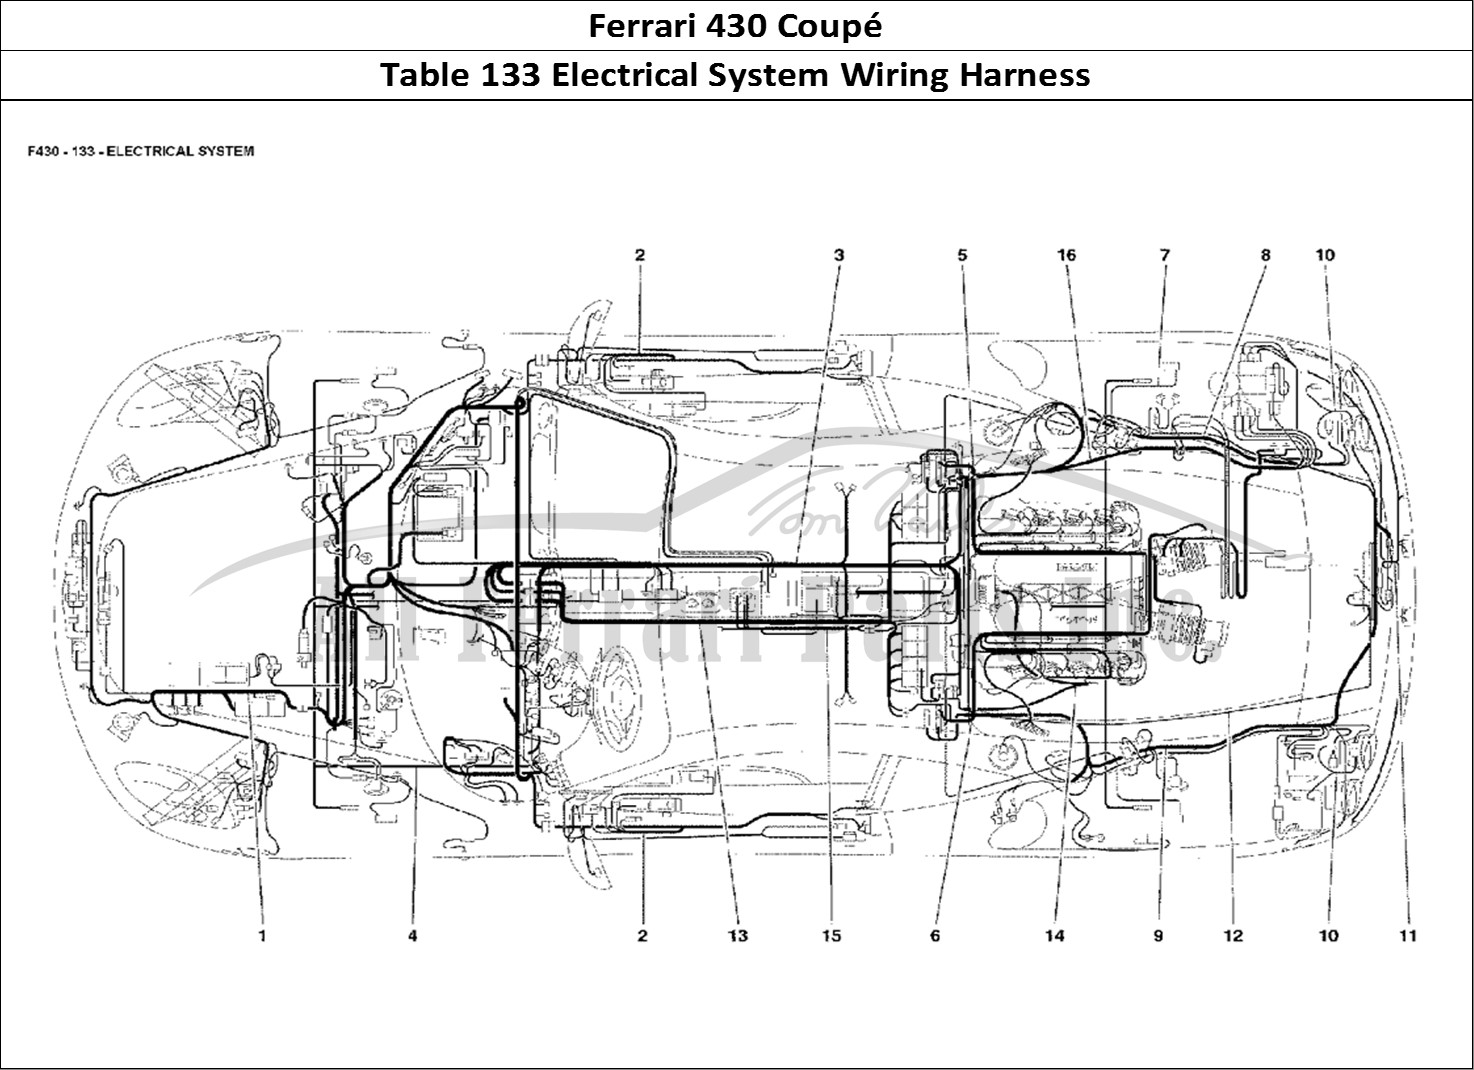 Ferrari Parts Ferrari 430 Coup Page 133 Electrical System